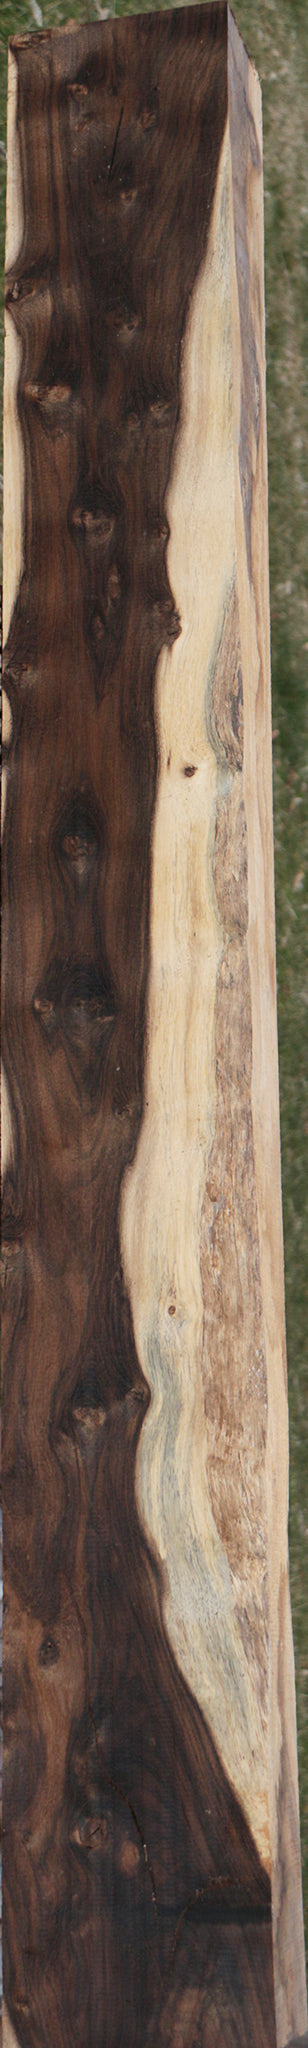 Rustic Leadwood Lumber